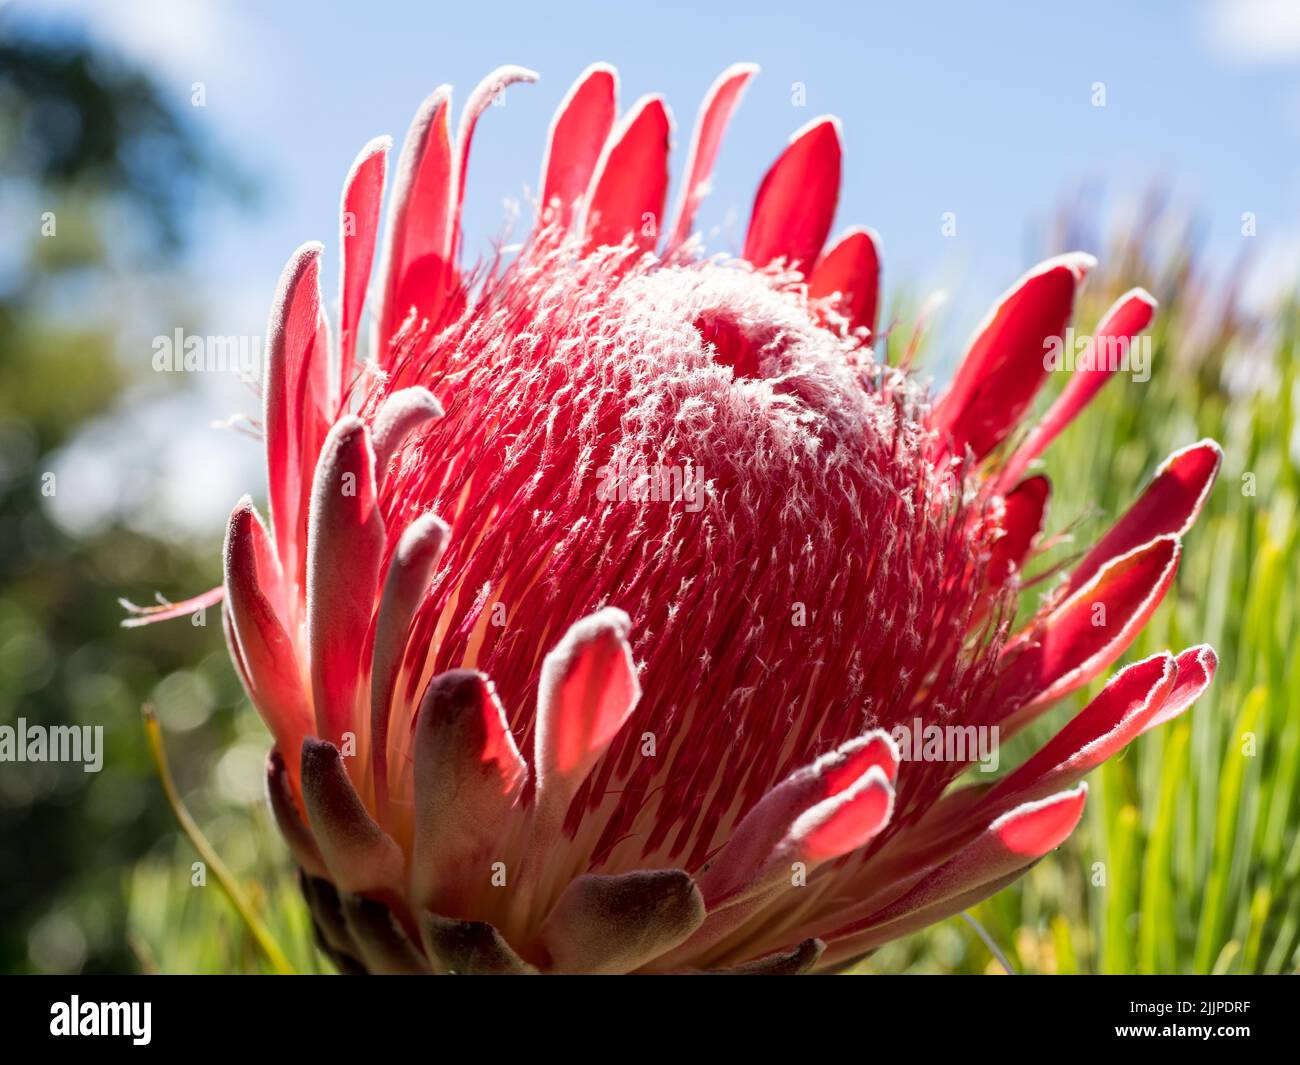 View of red protea sugarbush flower Stock Photo